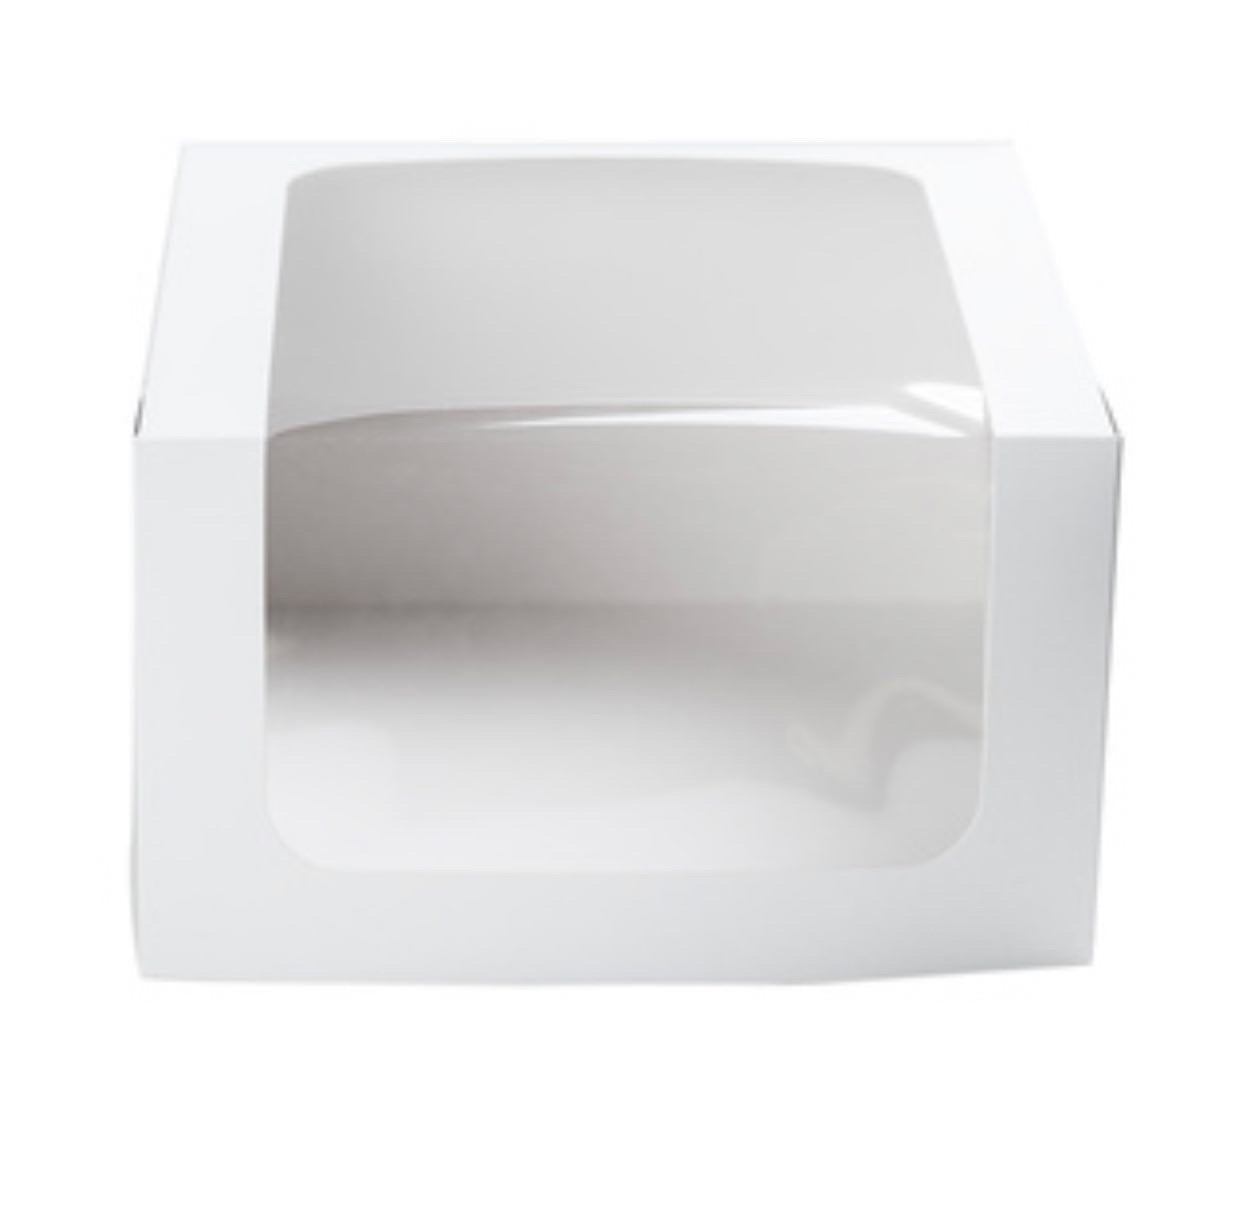 Windowed white cake boxes, plain 25 x 25 x 15 cm